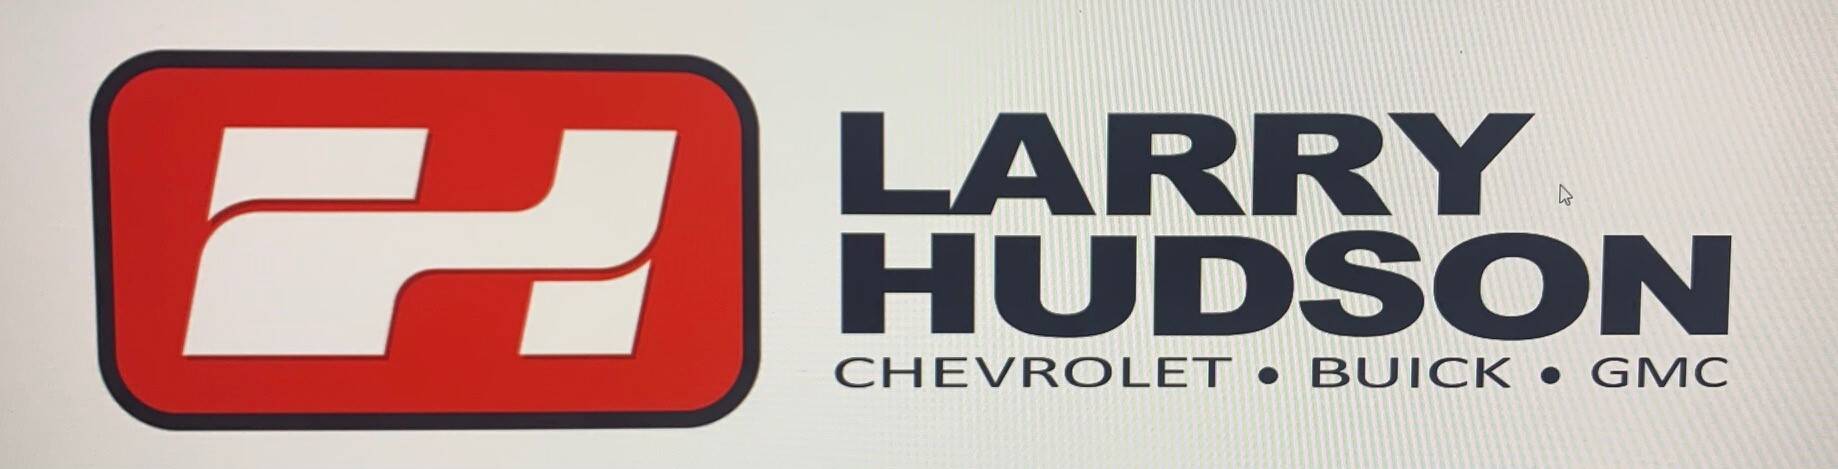 Larry Hudson Chevrolet Buick GMC In